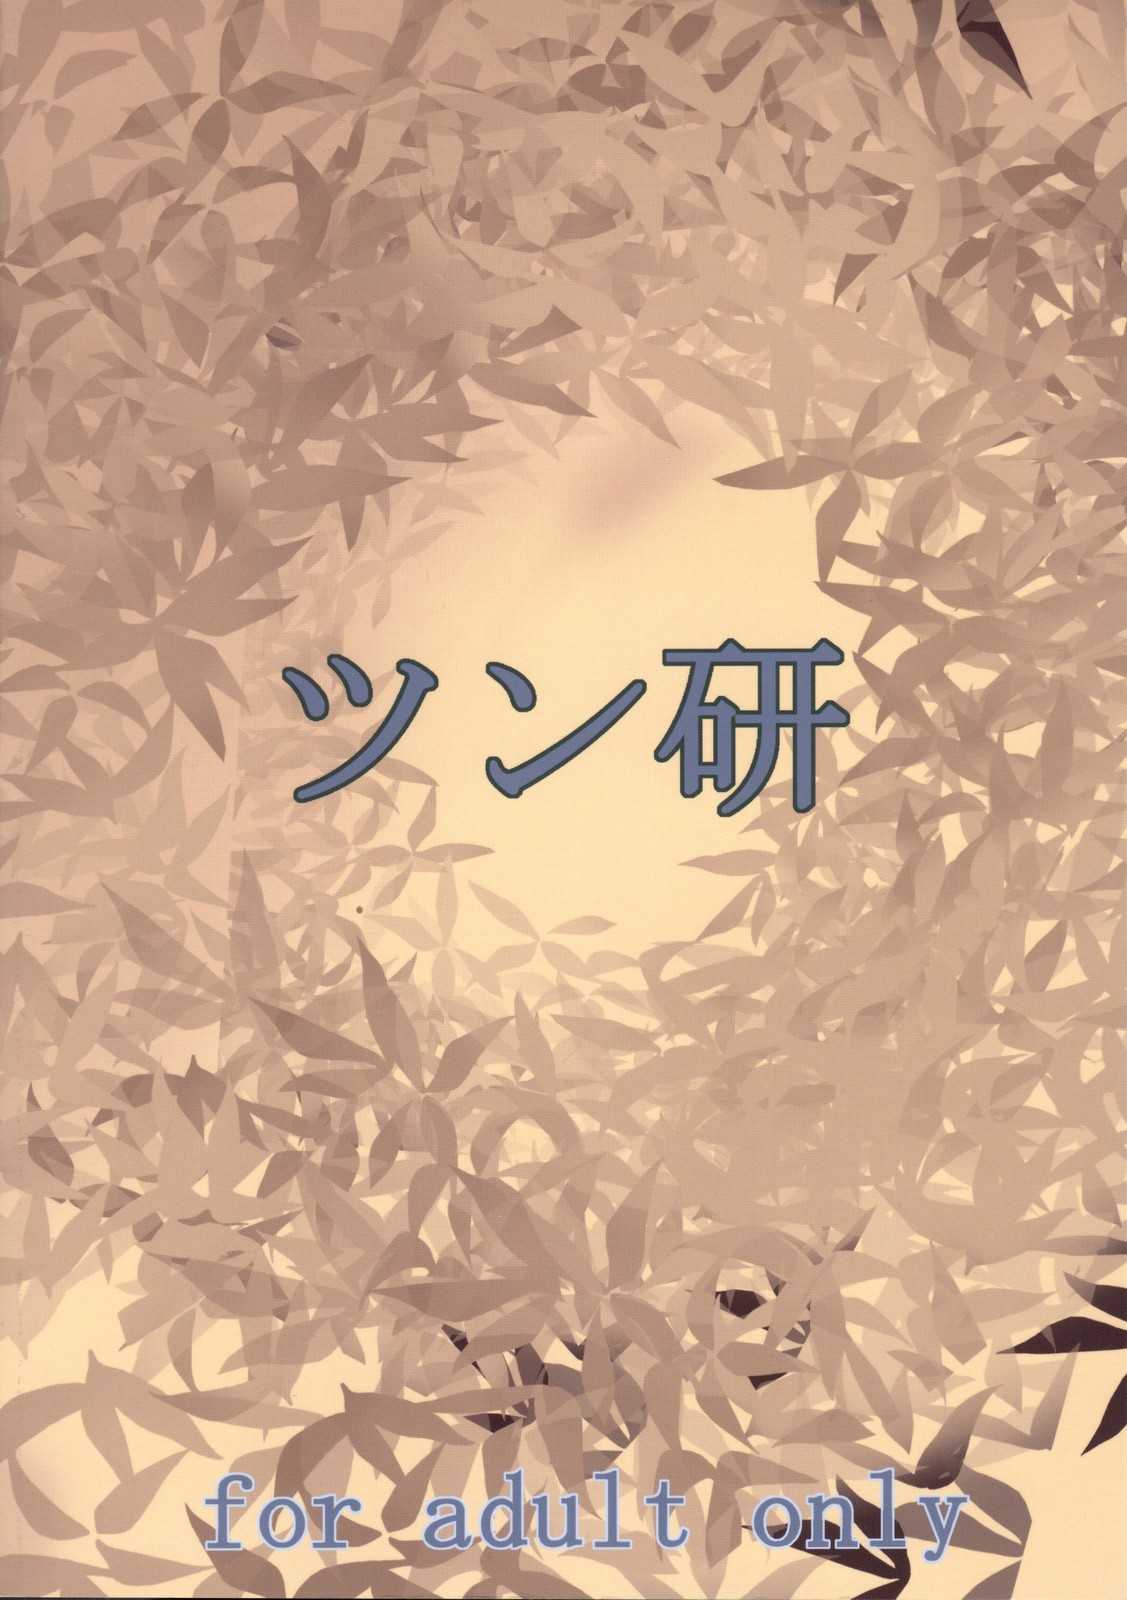 [Tsunken] Heaven&#039;s Door (English) (They Are My Noble Masters) {Doujin-Moe.us} 